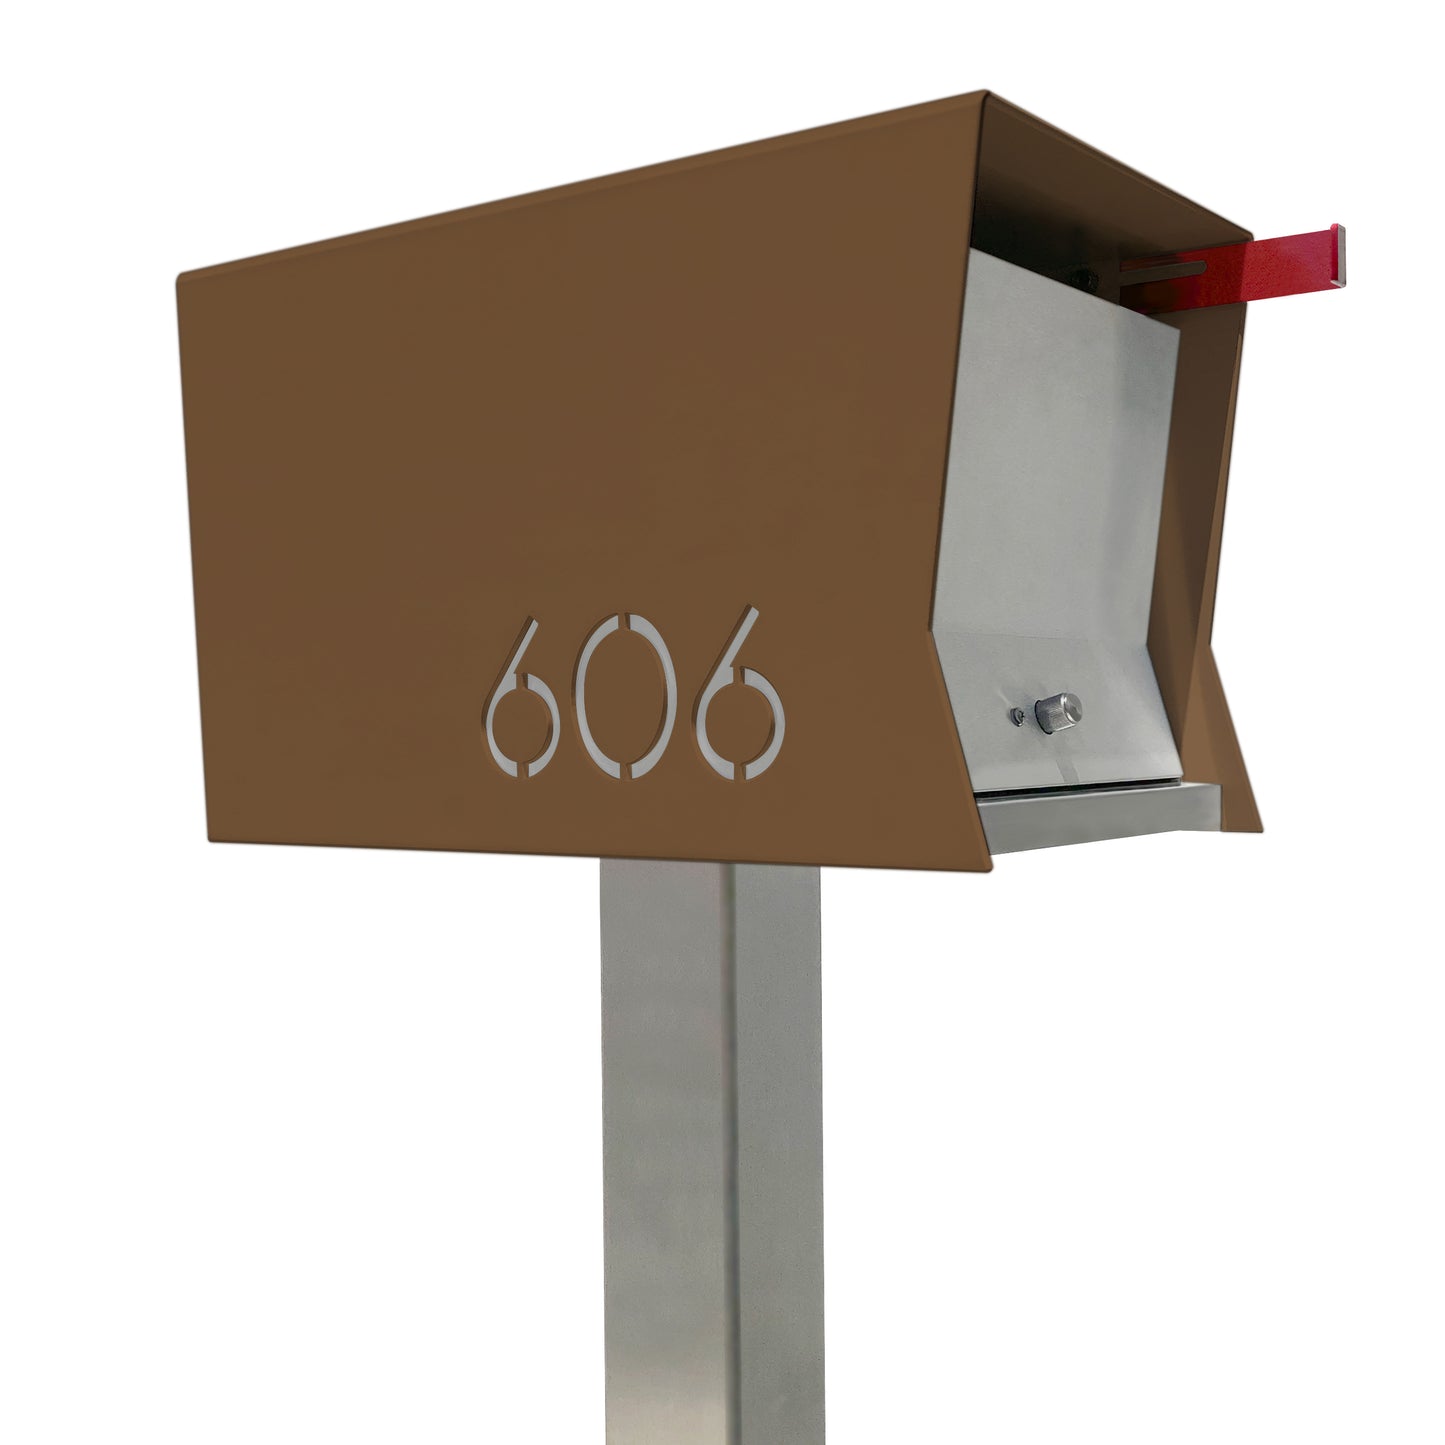 The Original Retrobox in COCONUT - Modern Mailbox brown and grey